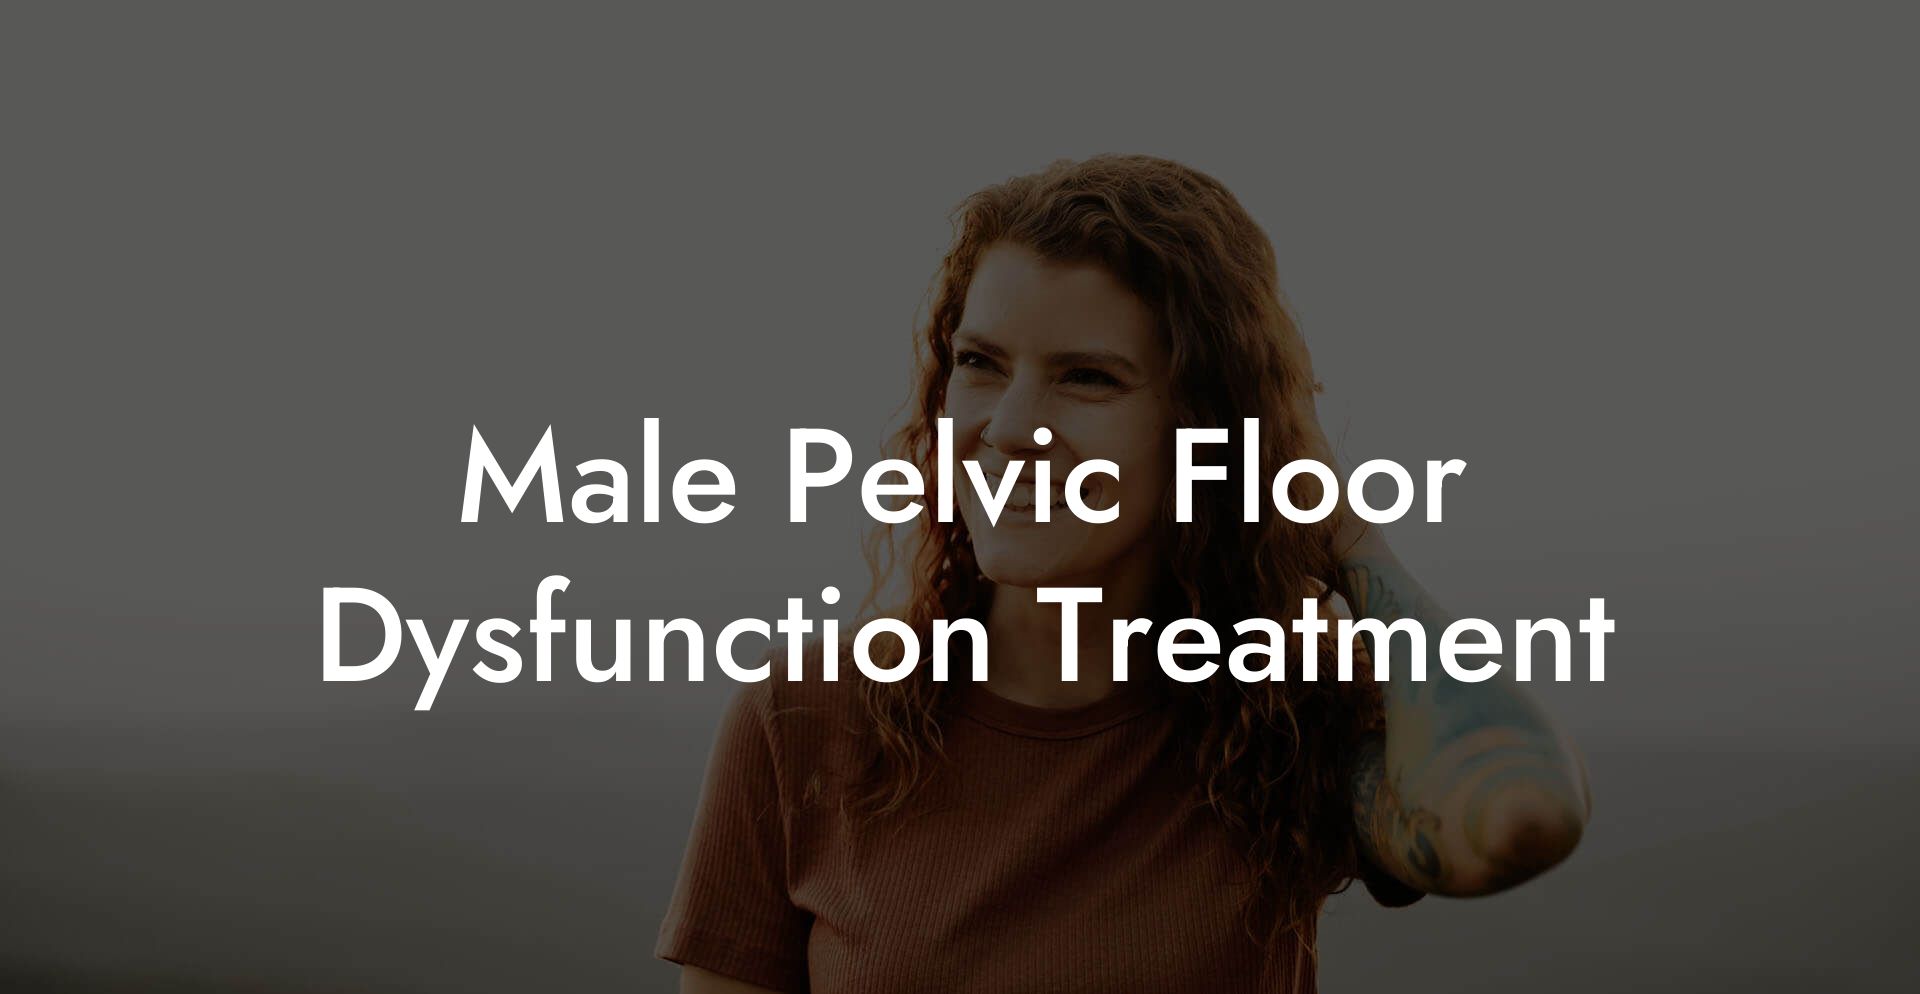 Male Pelvic Floor Dysfunction Treatment